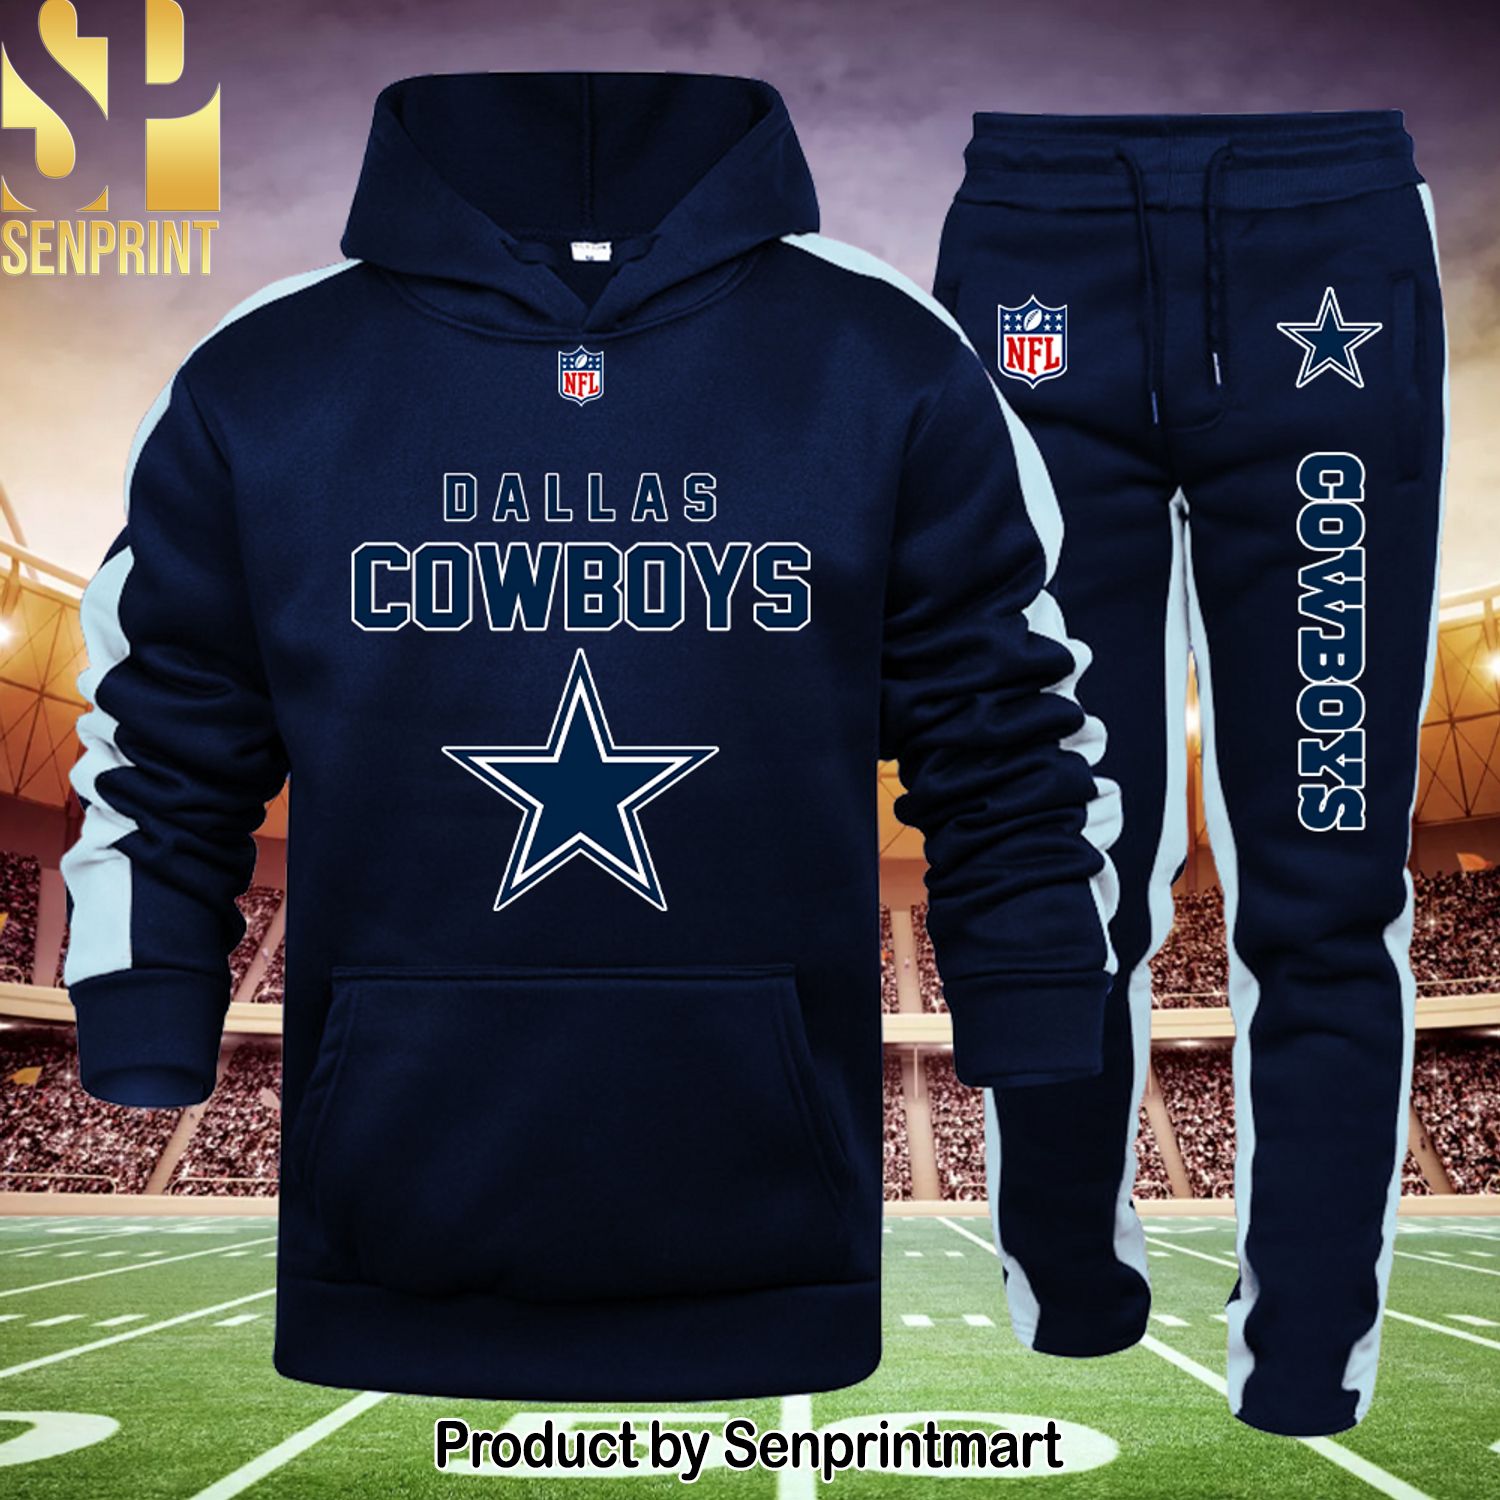 NFL Dallas Cowboys New Fashion Shirt and Sweatpants